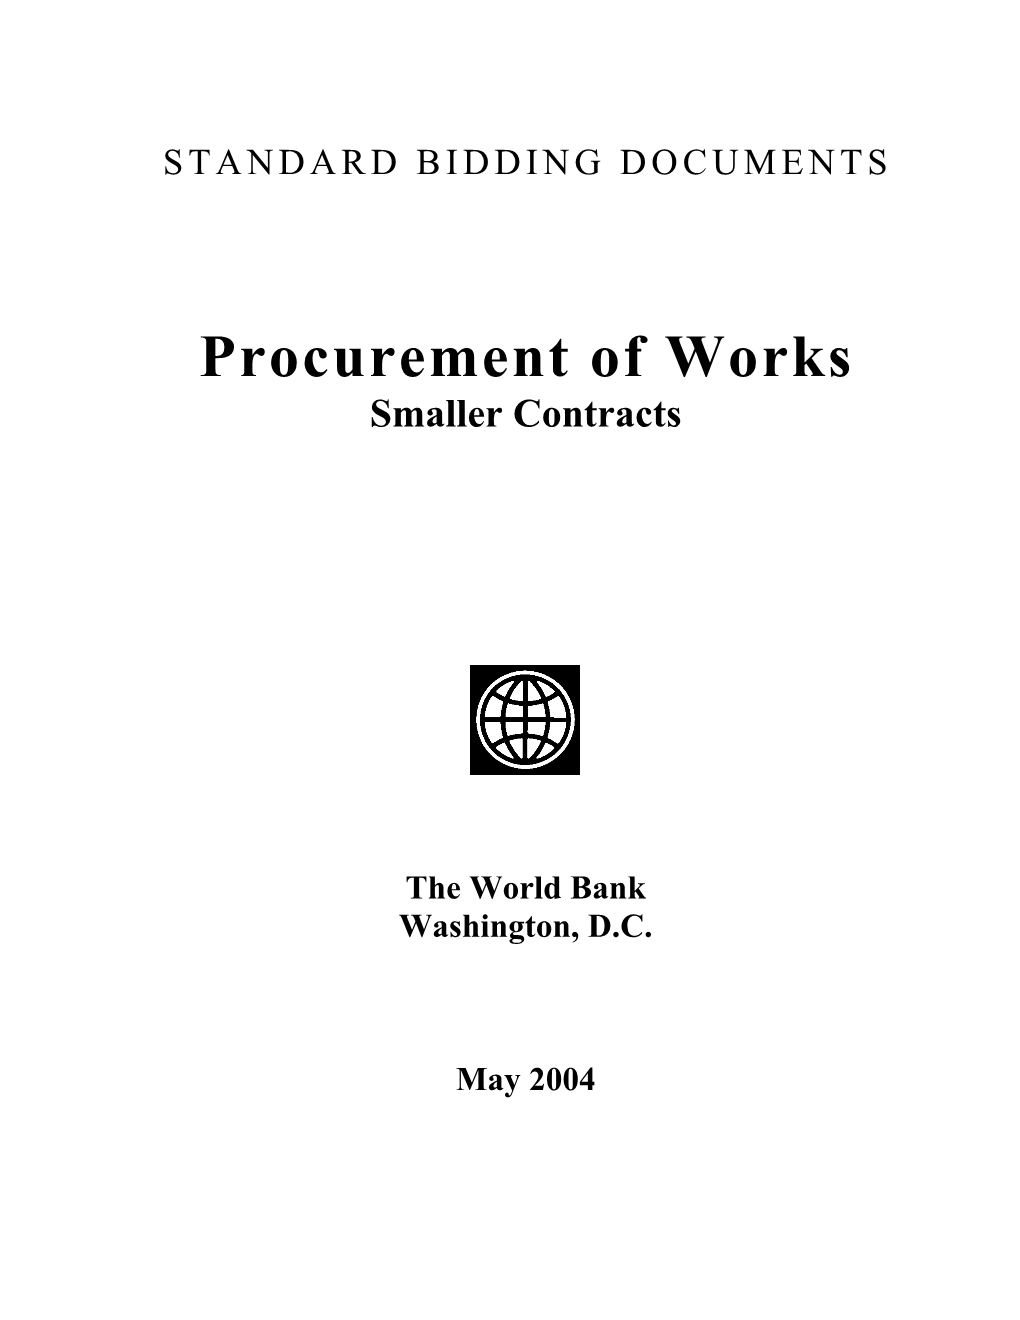 Standard Bidding Documents